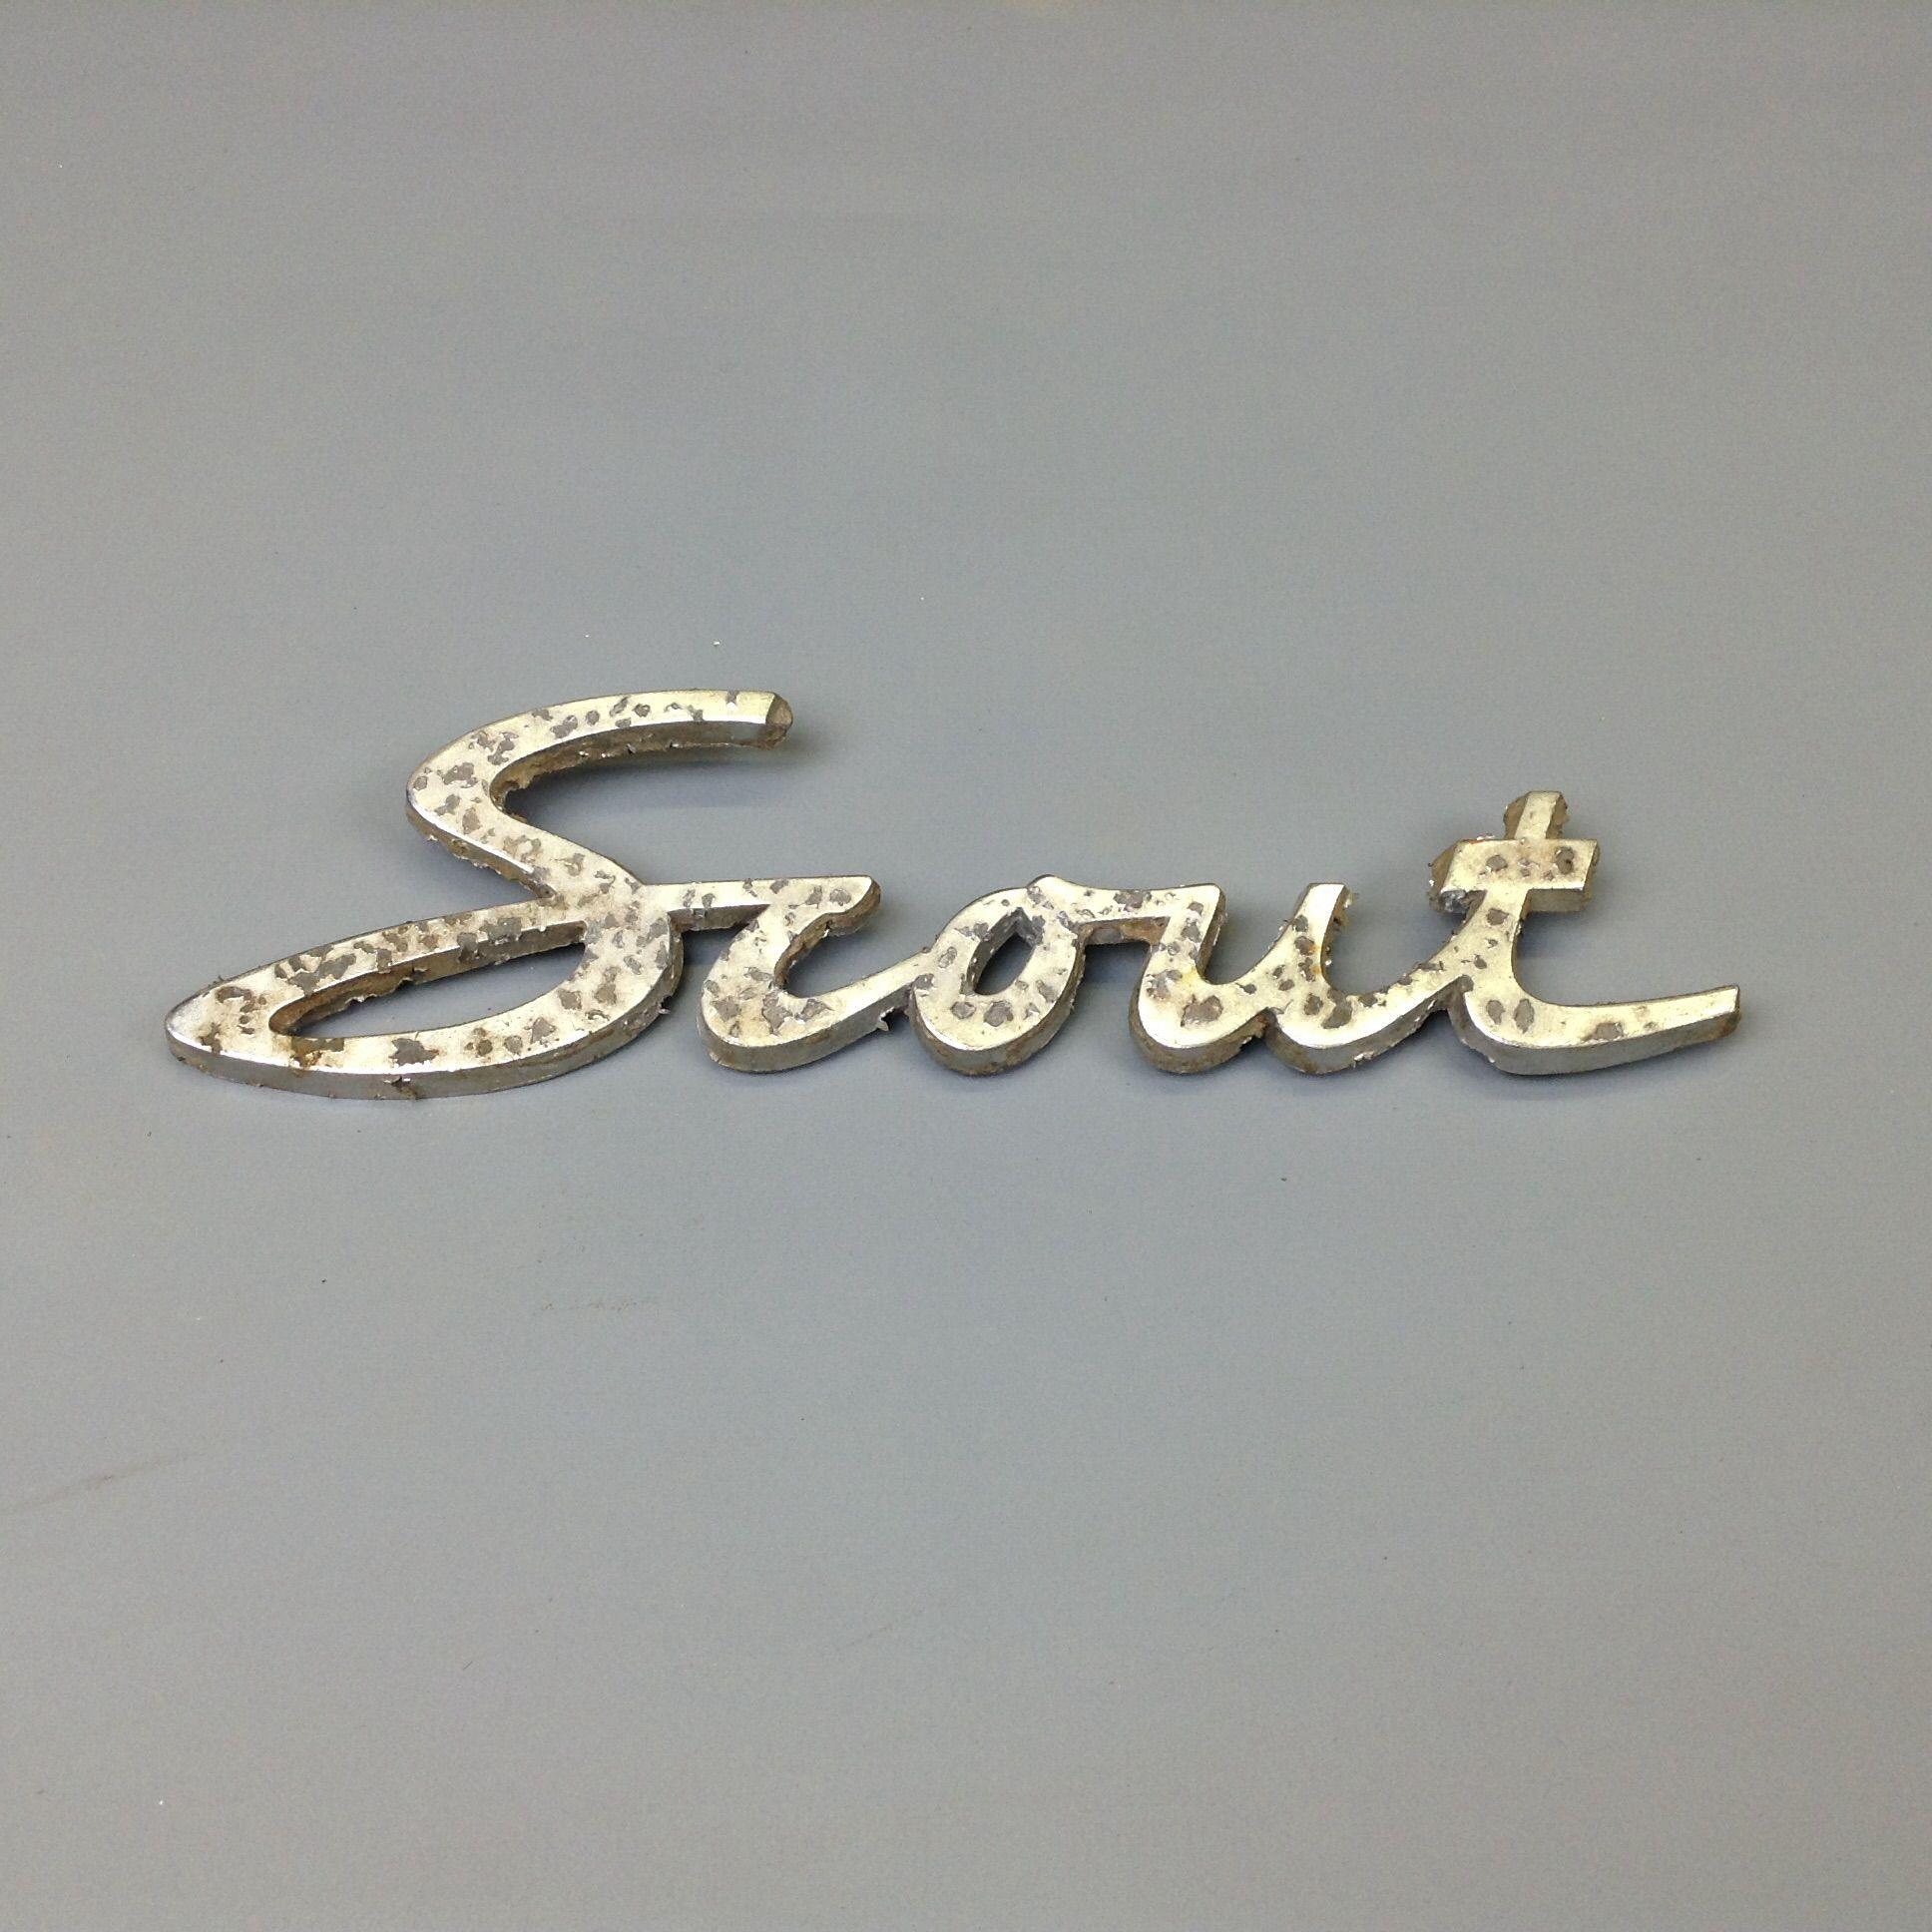 International Scout Logo - Scout 80 800 Script Emblem - used - IH Scout